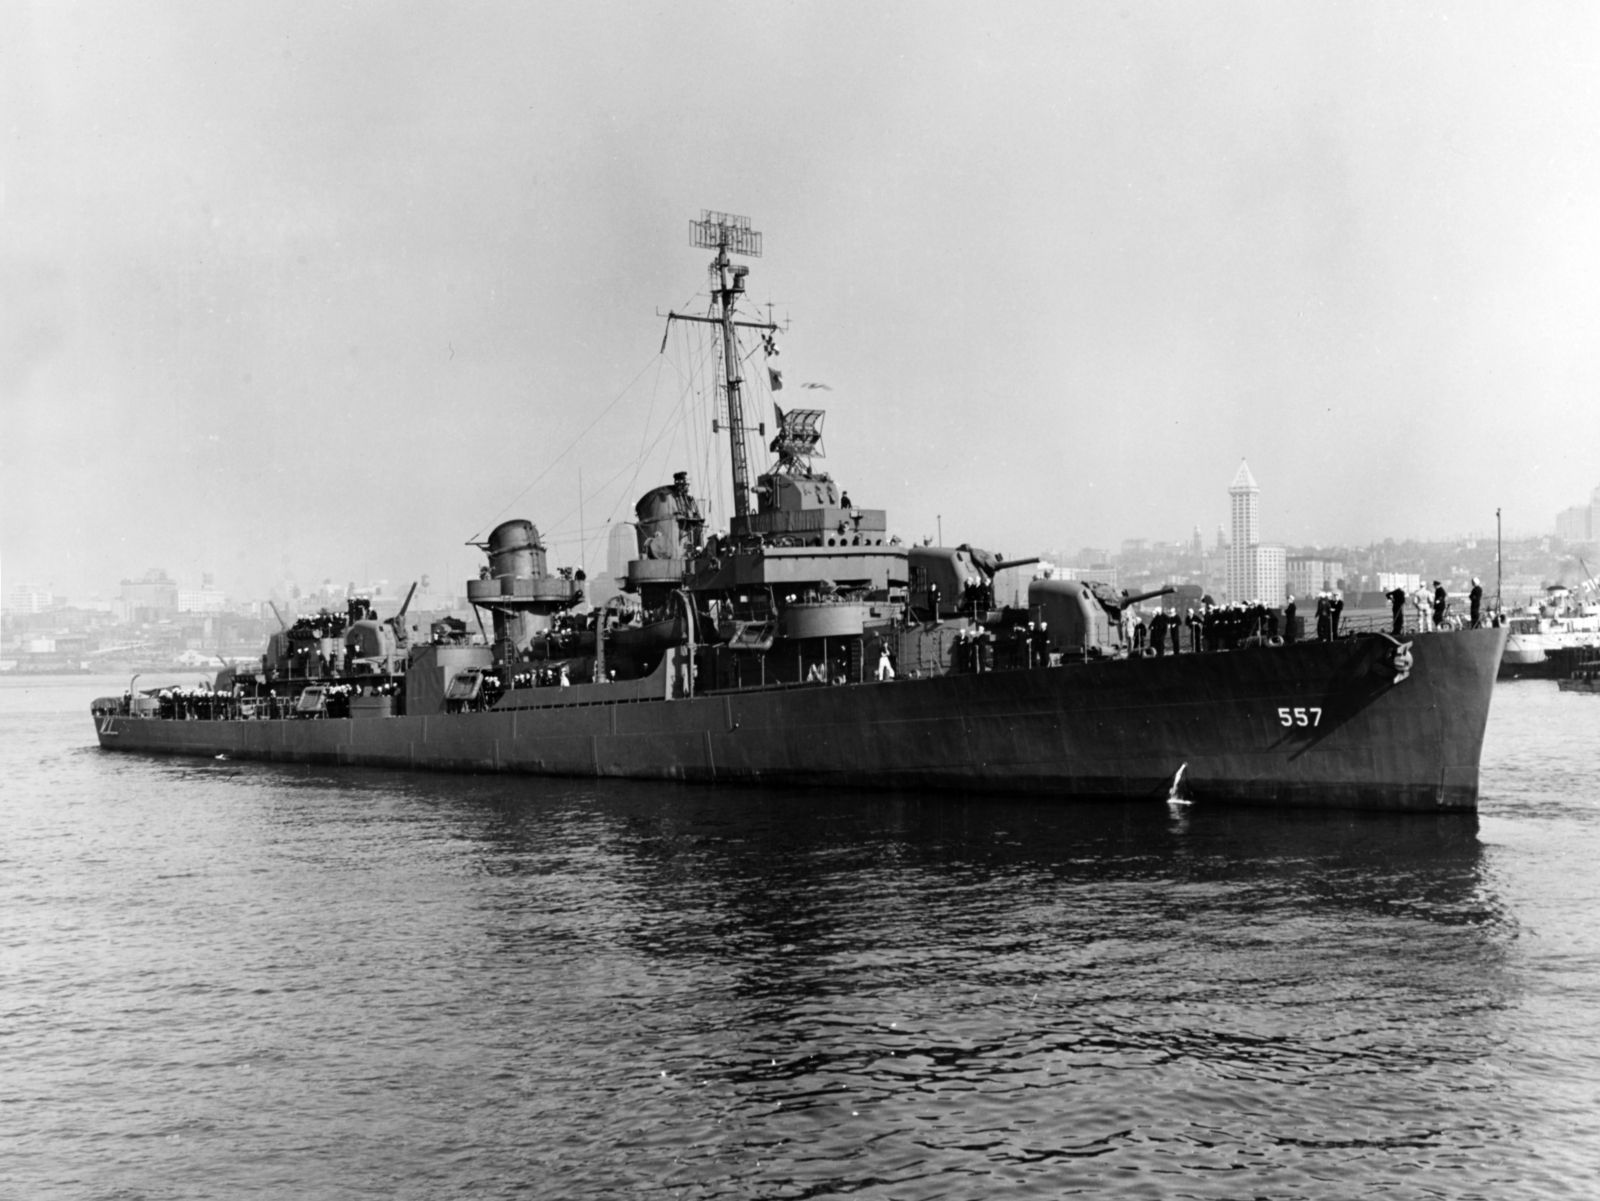 USS Johnston (DD-557) a Fletcher-class destroyer on 27 October 1943